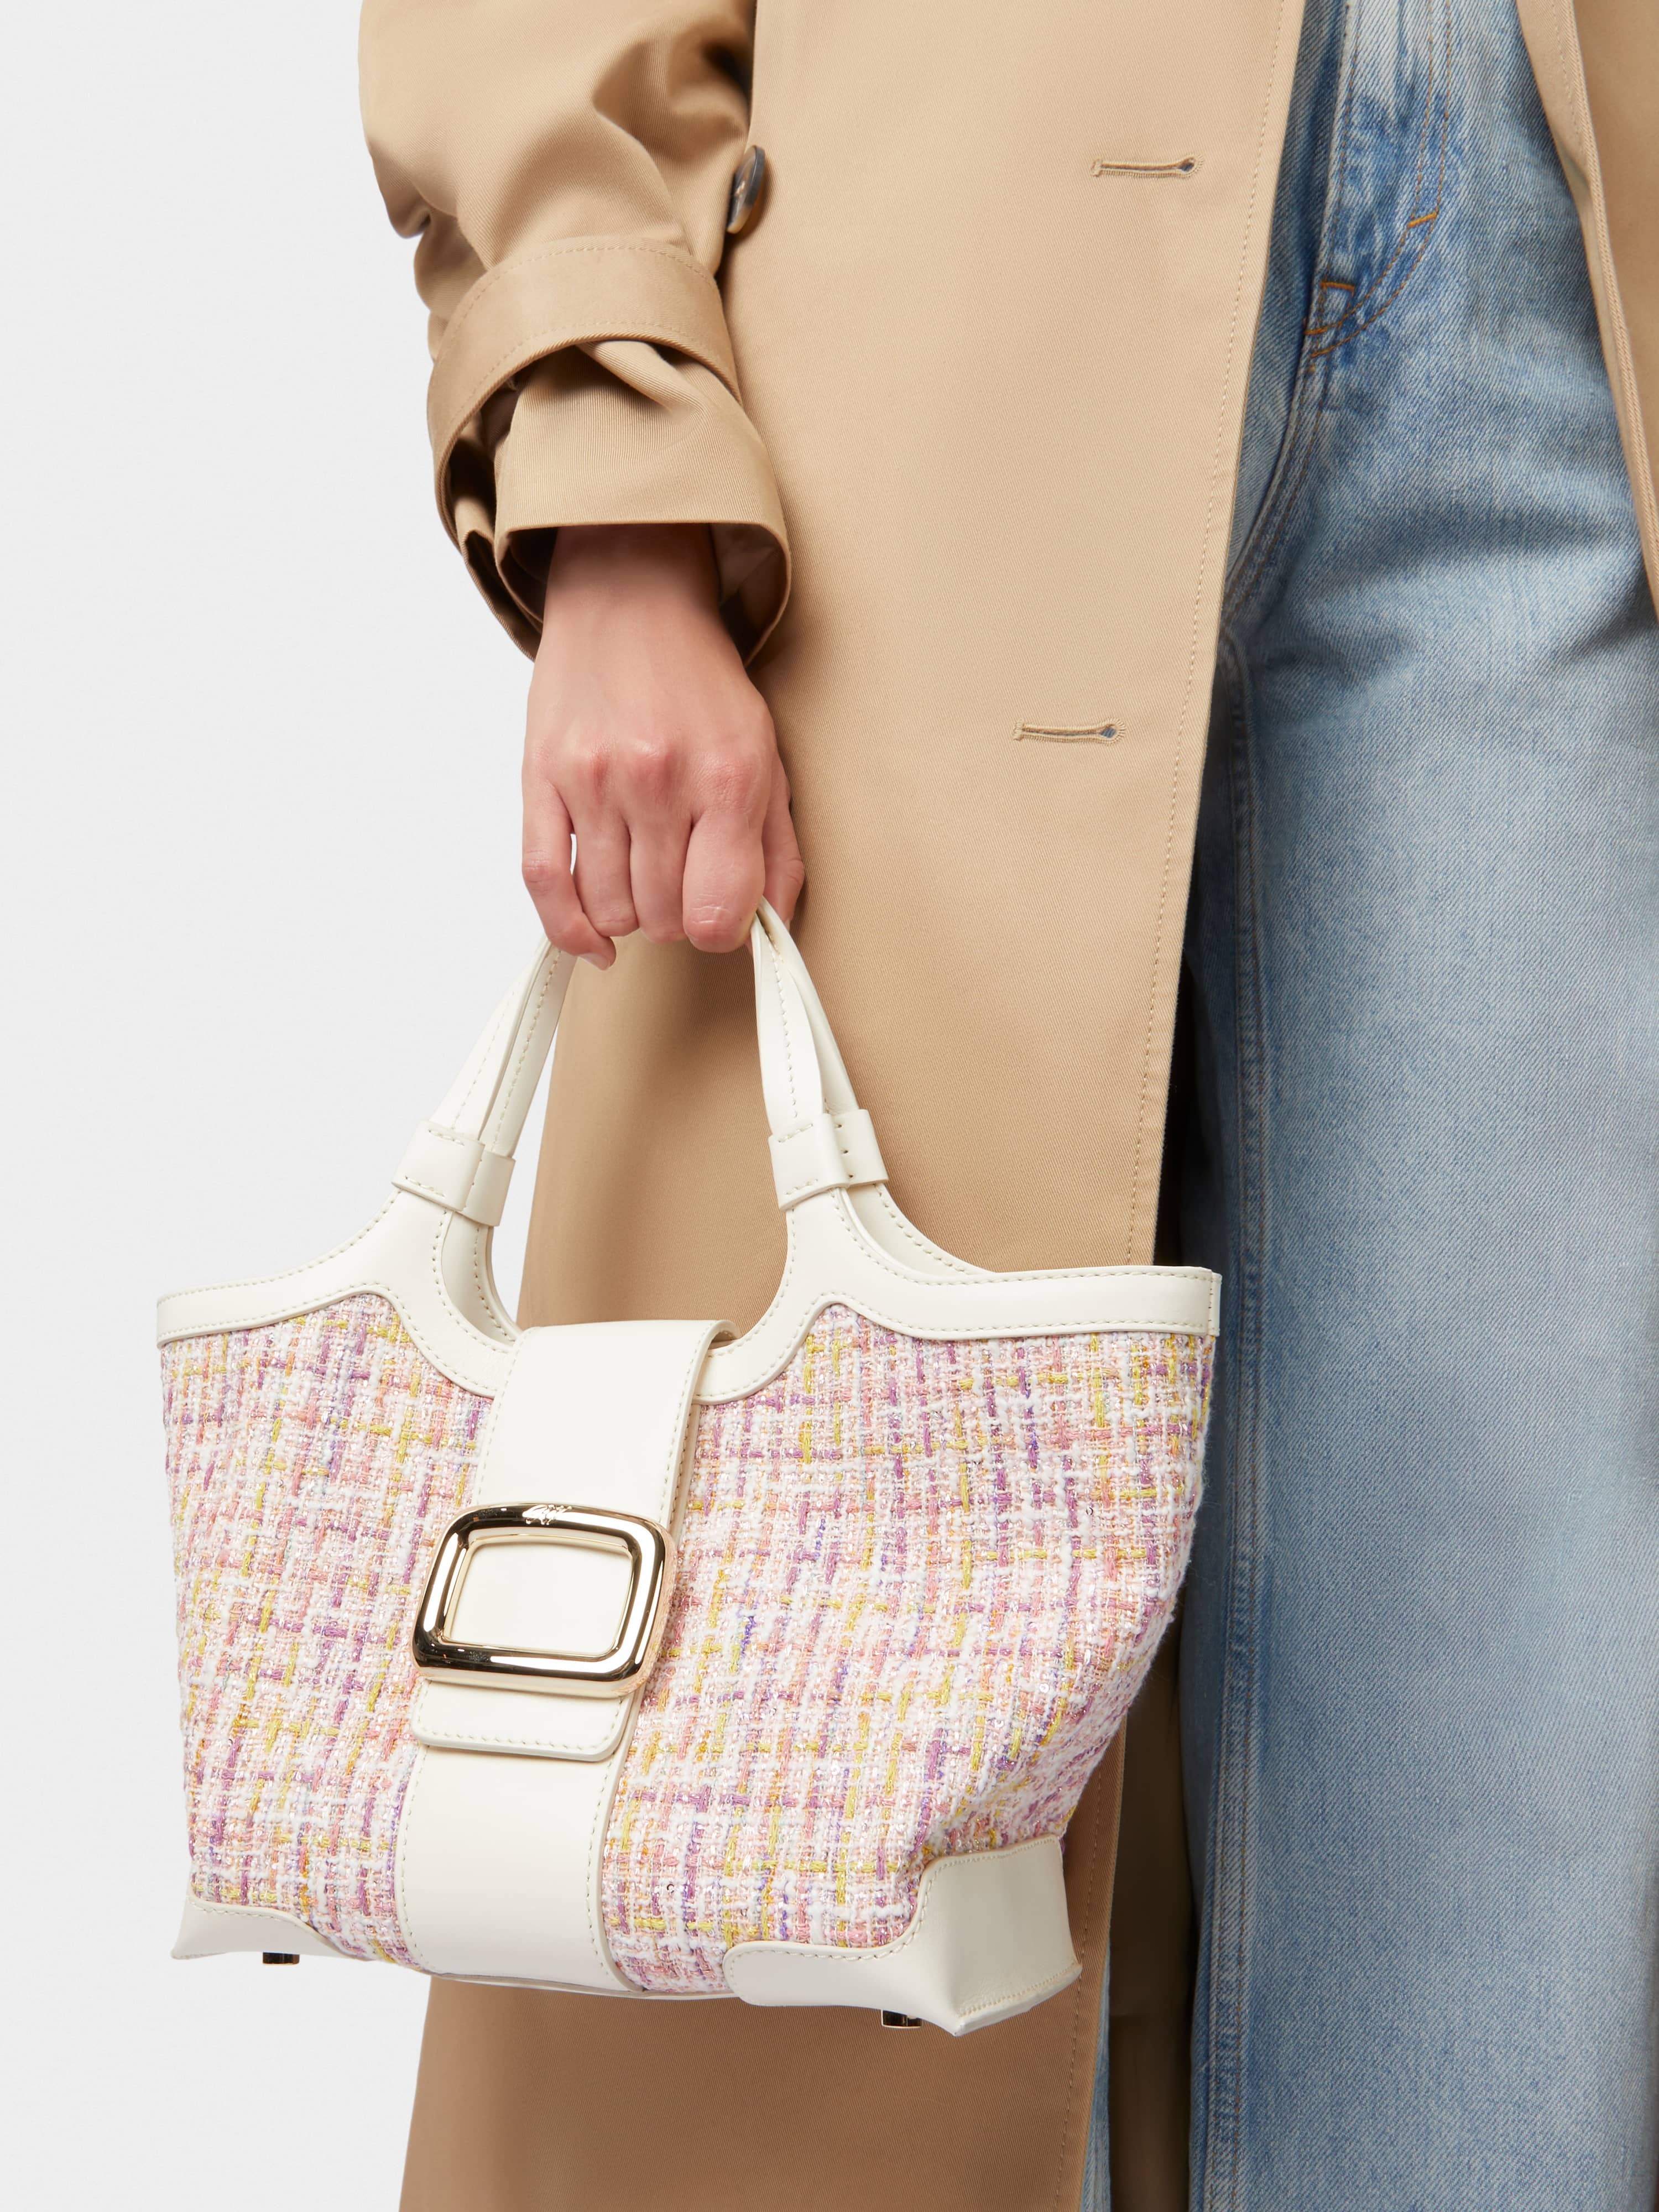 Viv' Choc Mini Shopping Bag in Fabric - 2